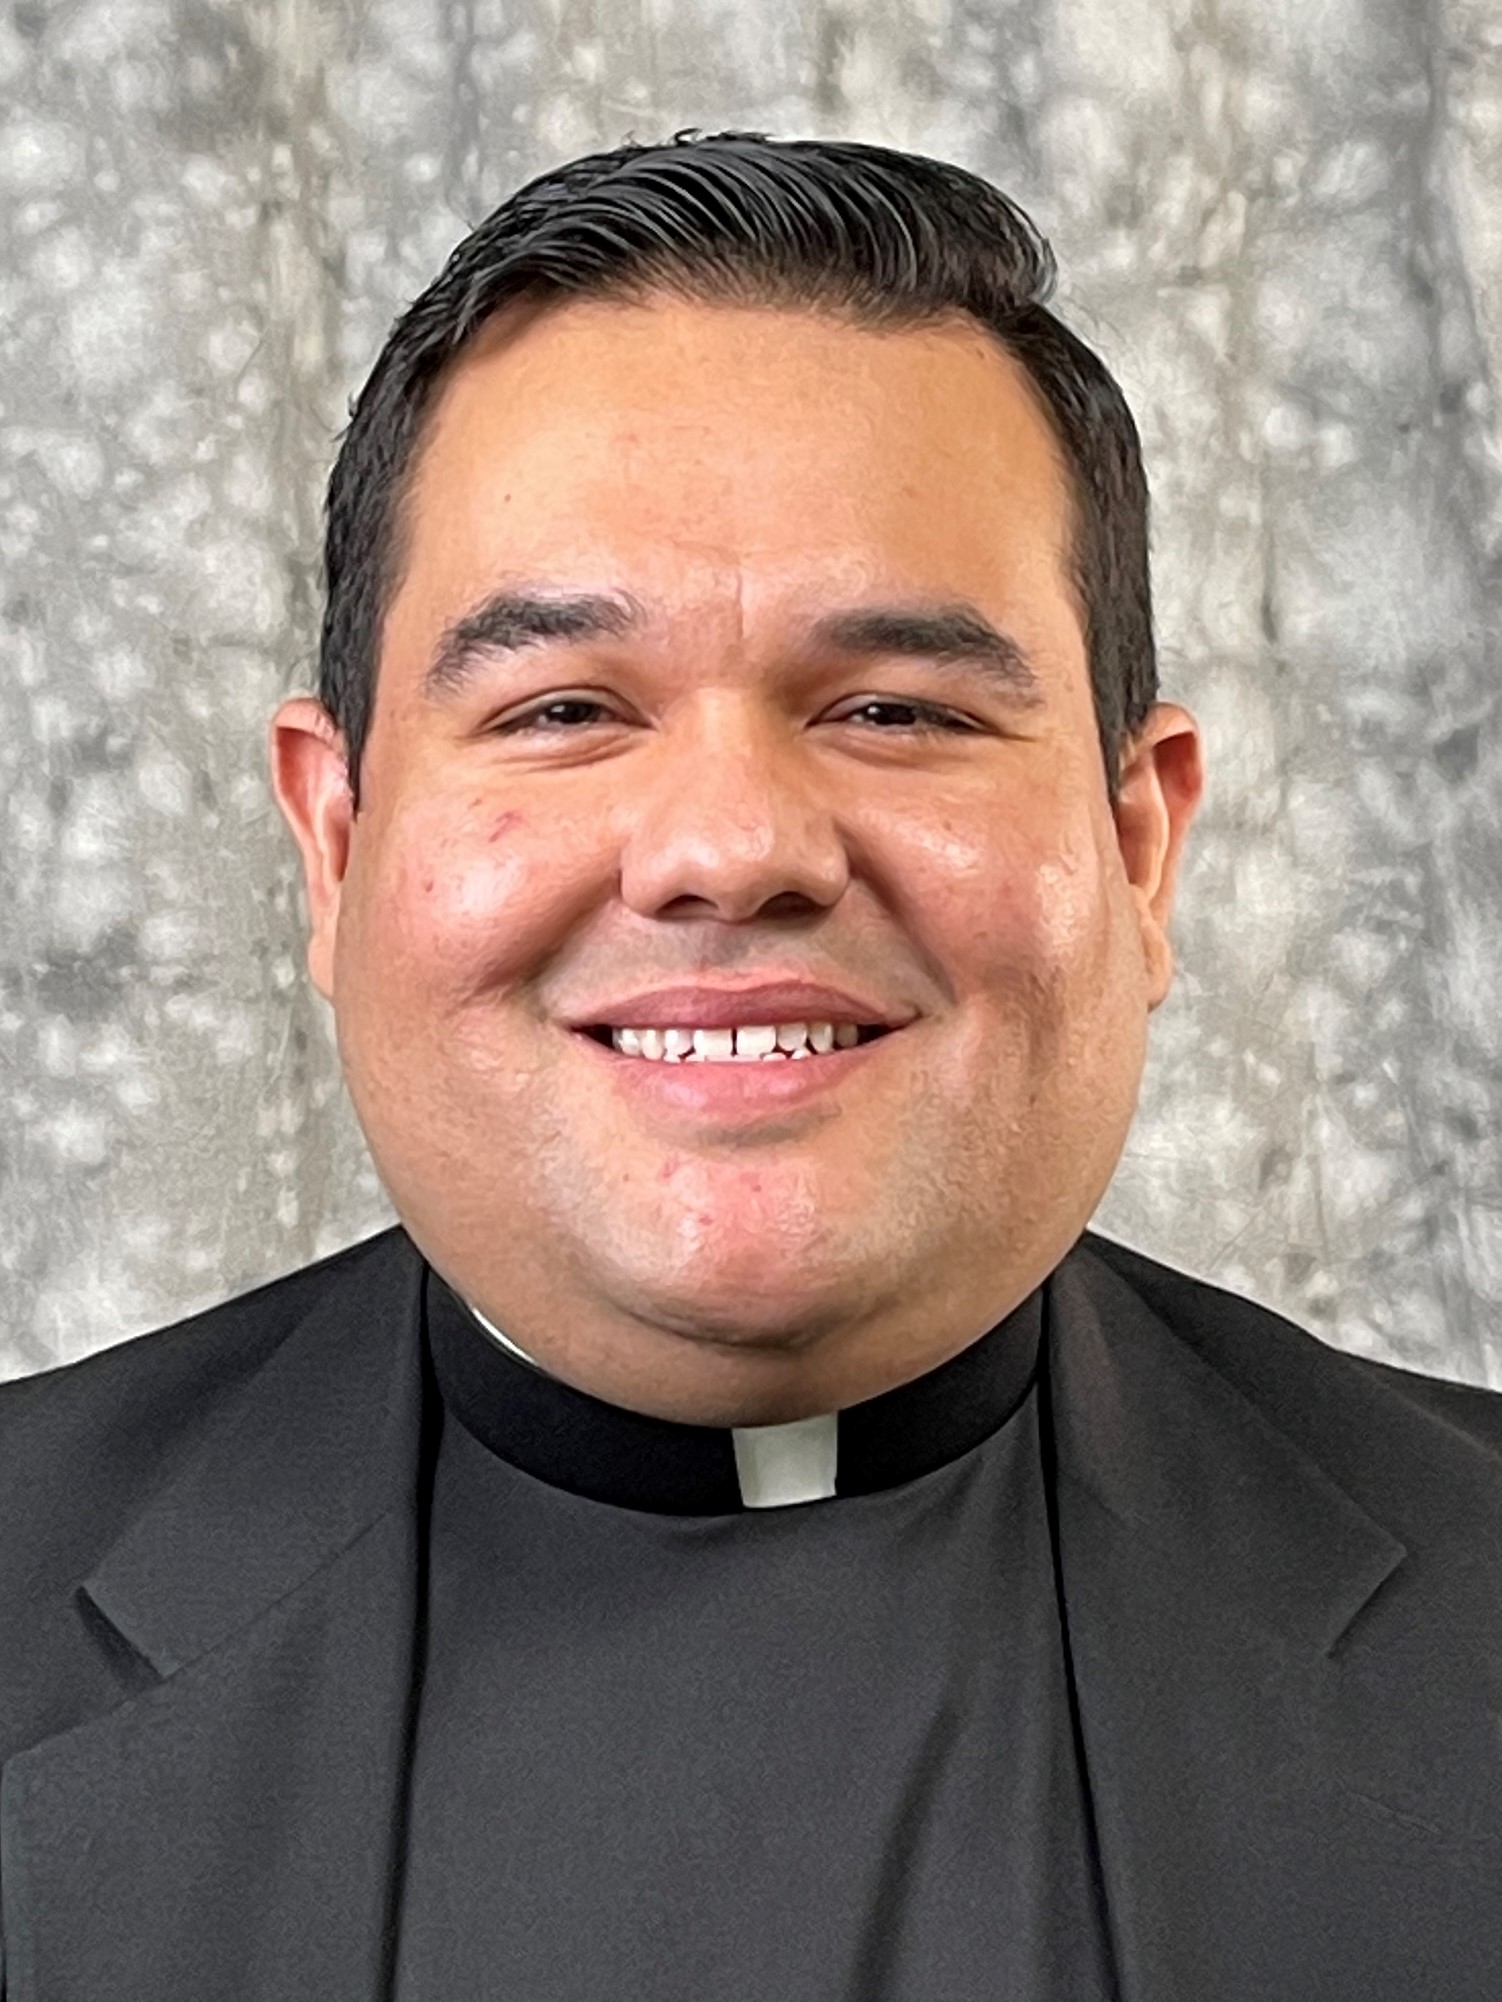 Rev. Carlos Martinez